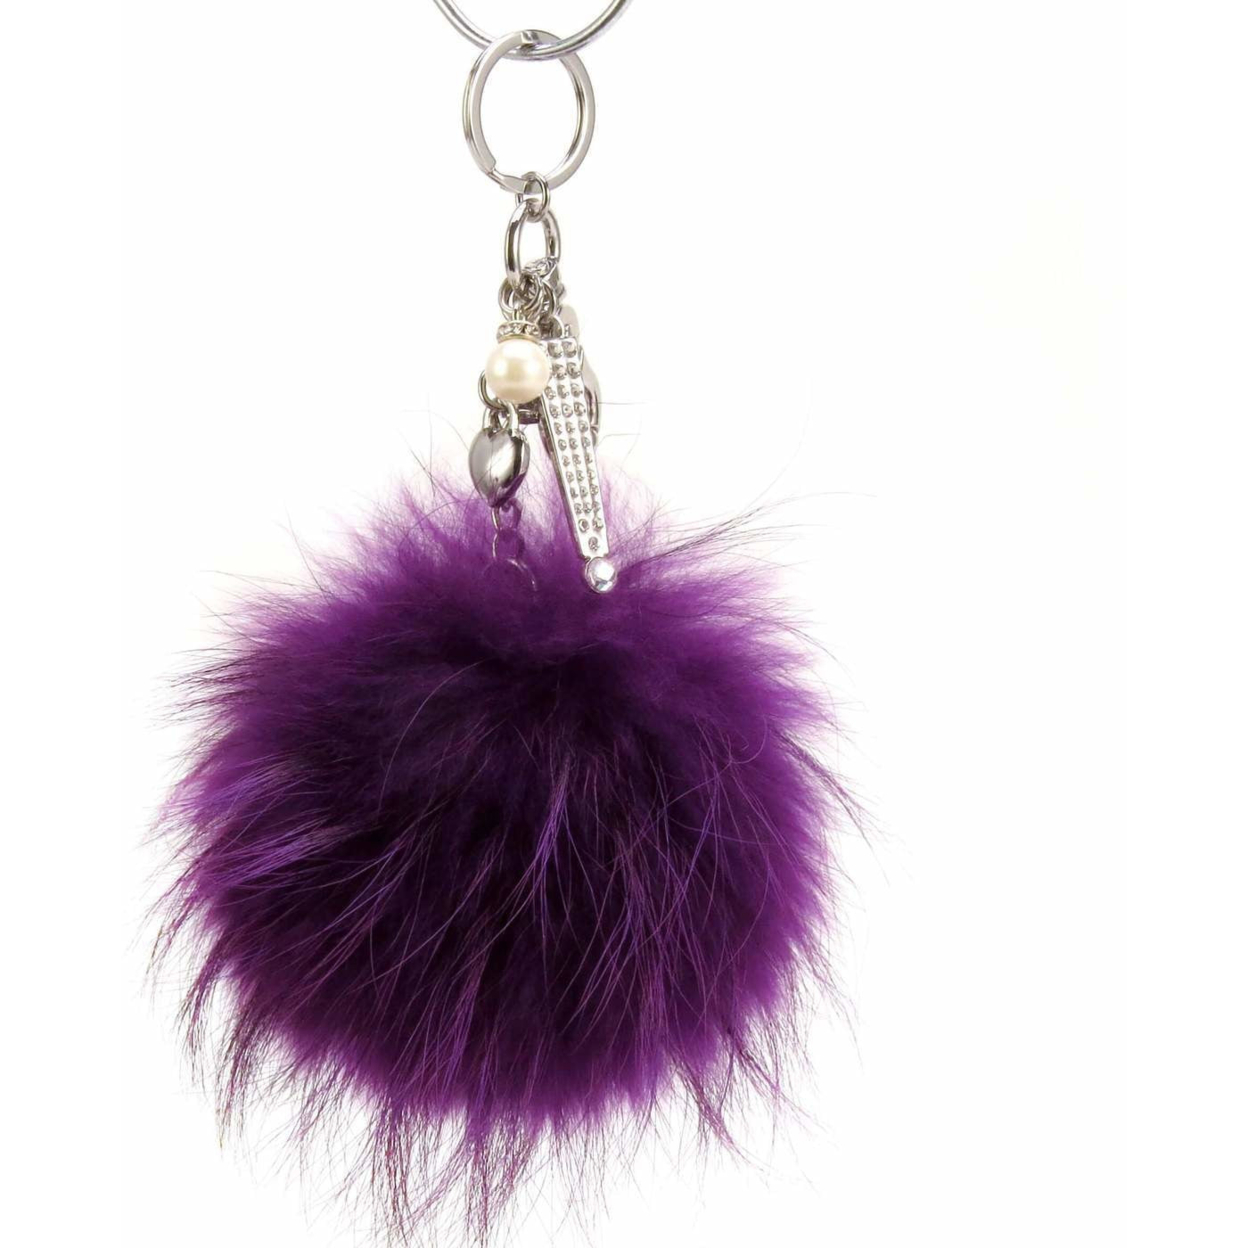 Real Fur Puff Ball Pom-Pom 6 Accessory Dangle Purse Charm - Purple With Silver Hardware